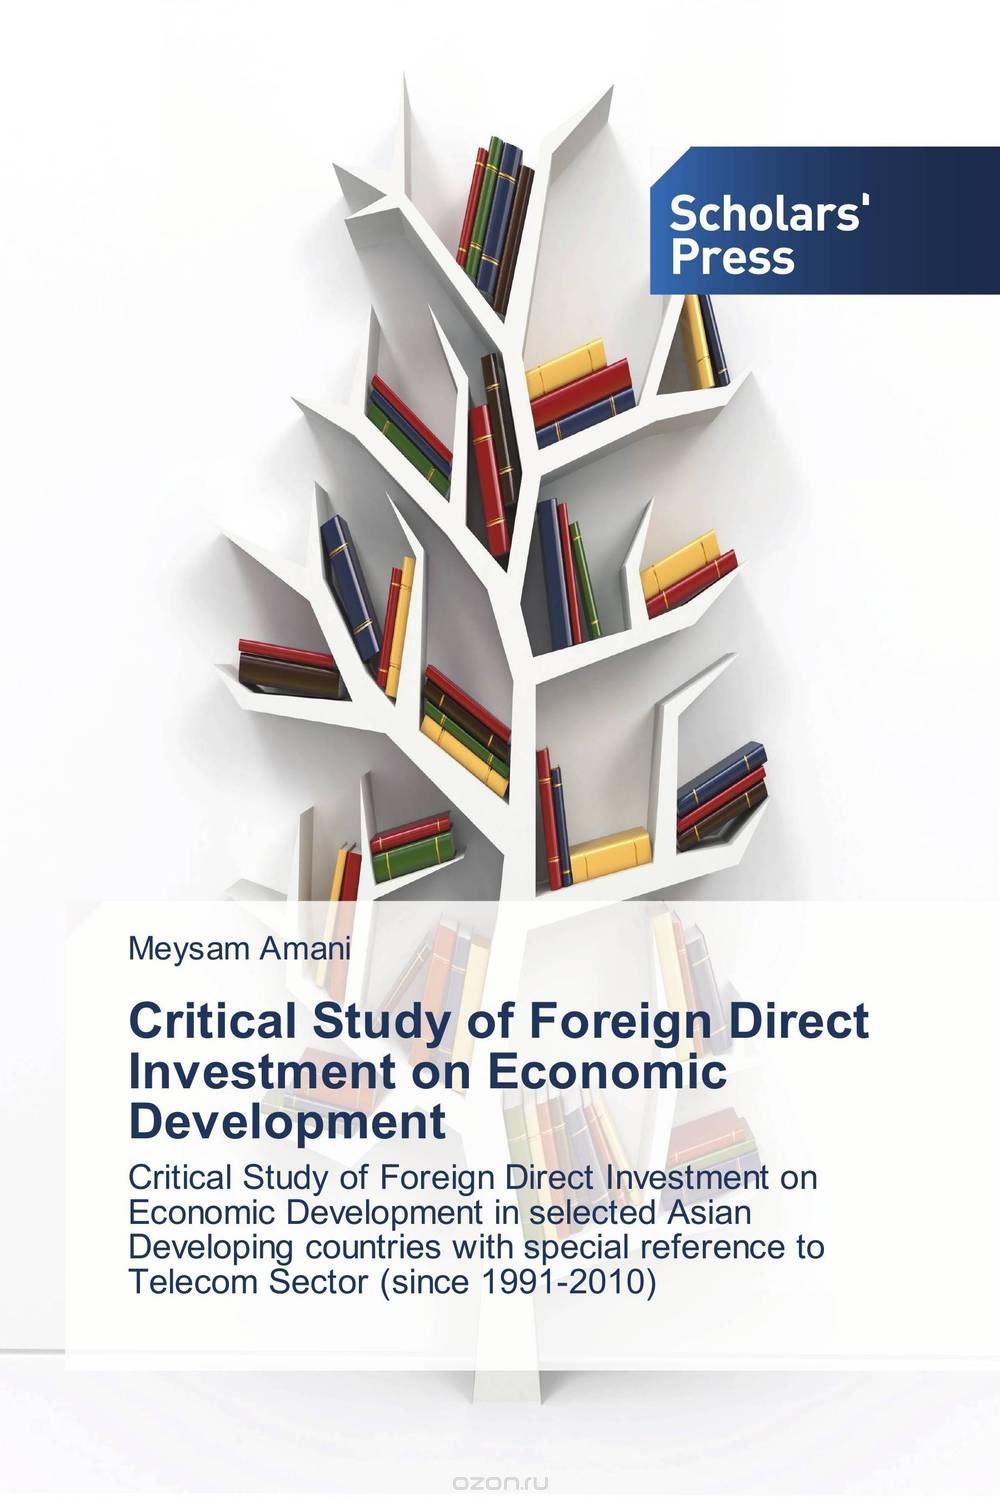 Скачать книгу "Critical Study of Foreign Direct Investment on Economic Development"